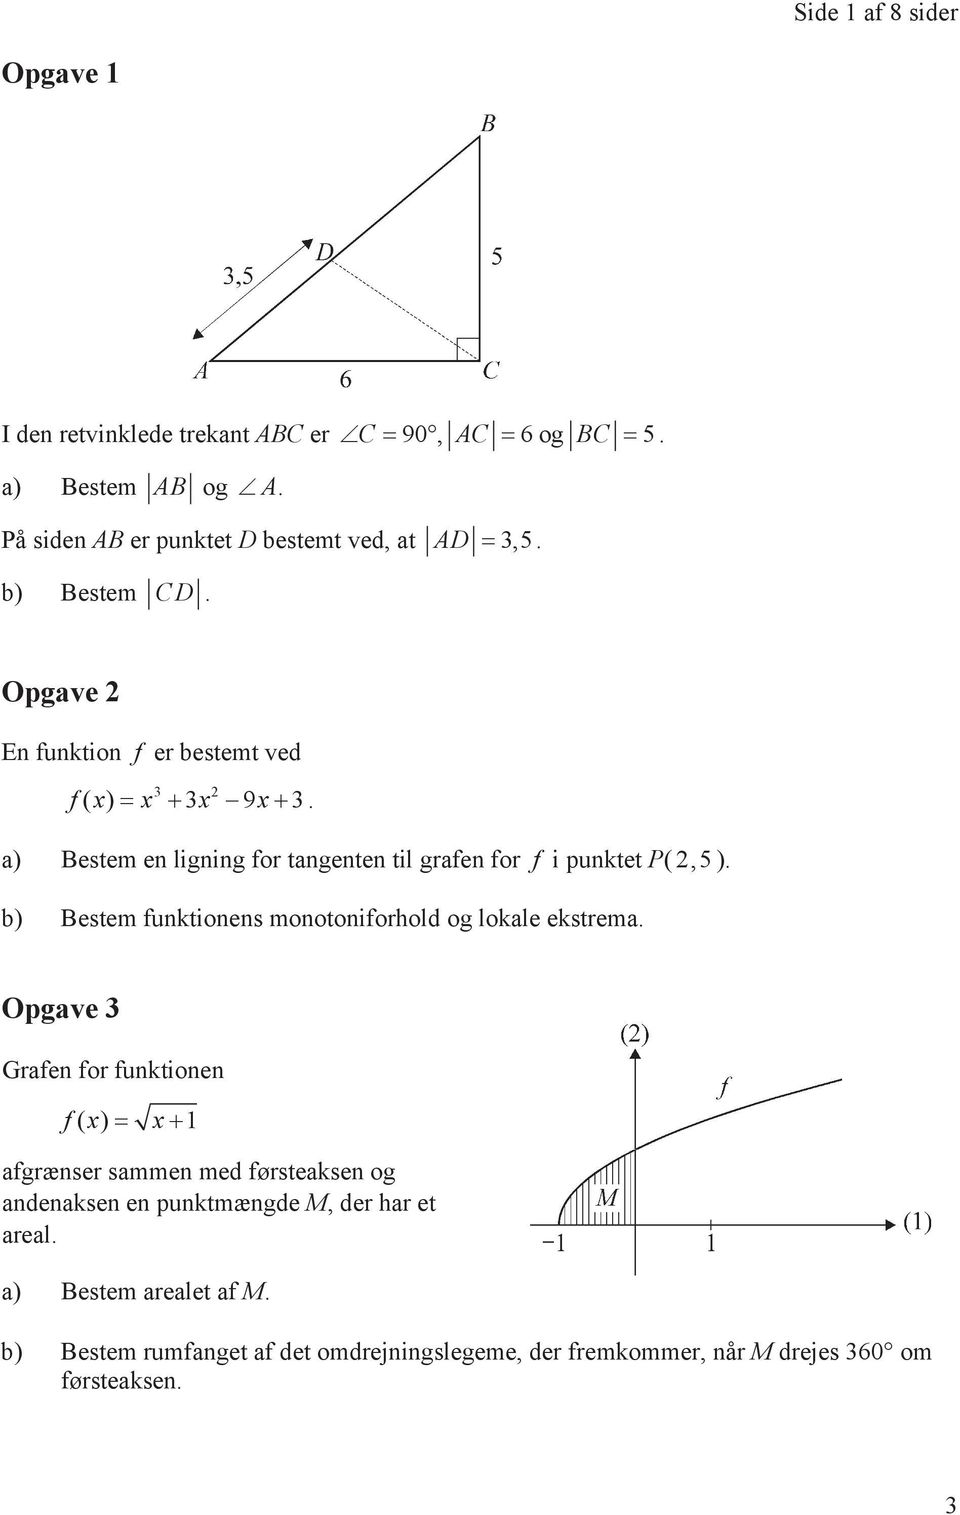 a) Bestem en ligning for tangenten til grafen for f i punktet P( 2,5). b) Bestem funktionens monotoniforhold og lokale ekstrema.